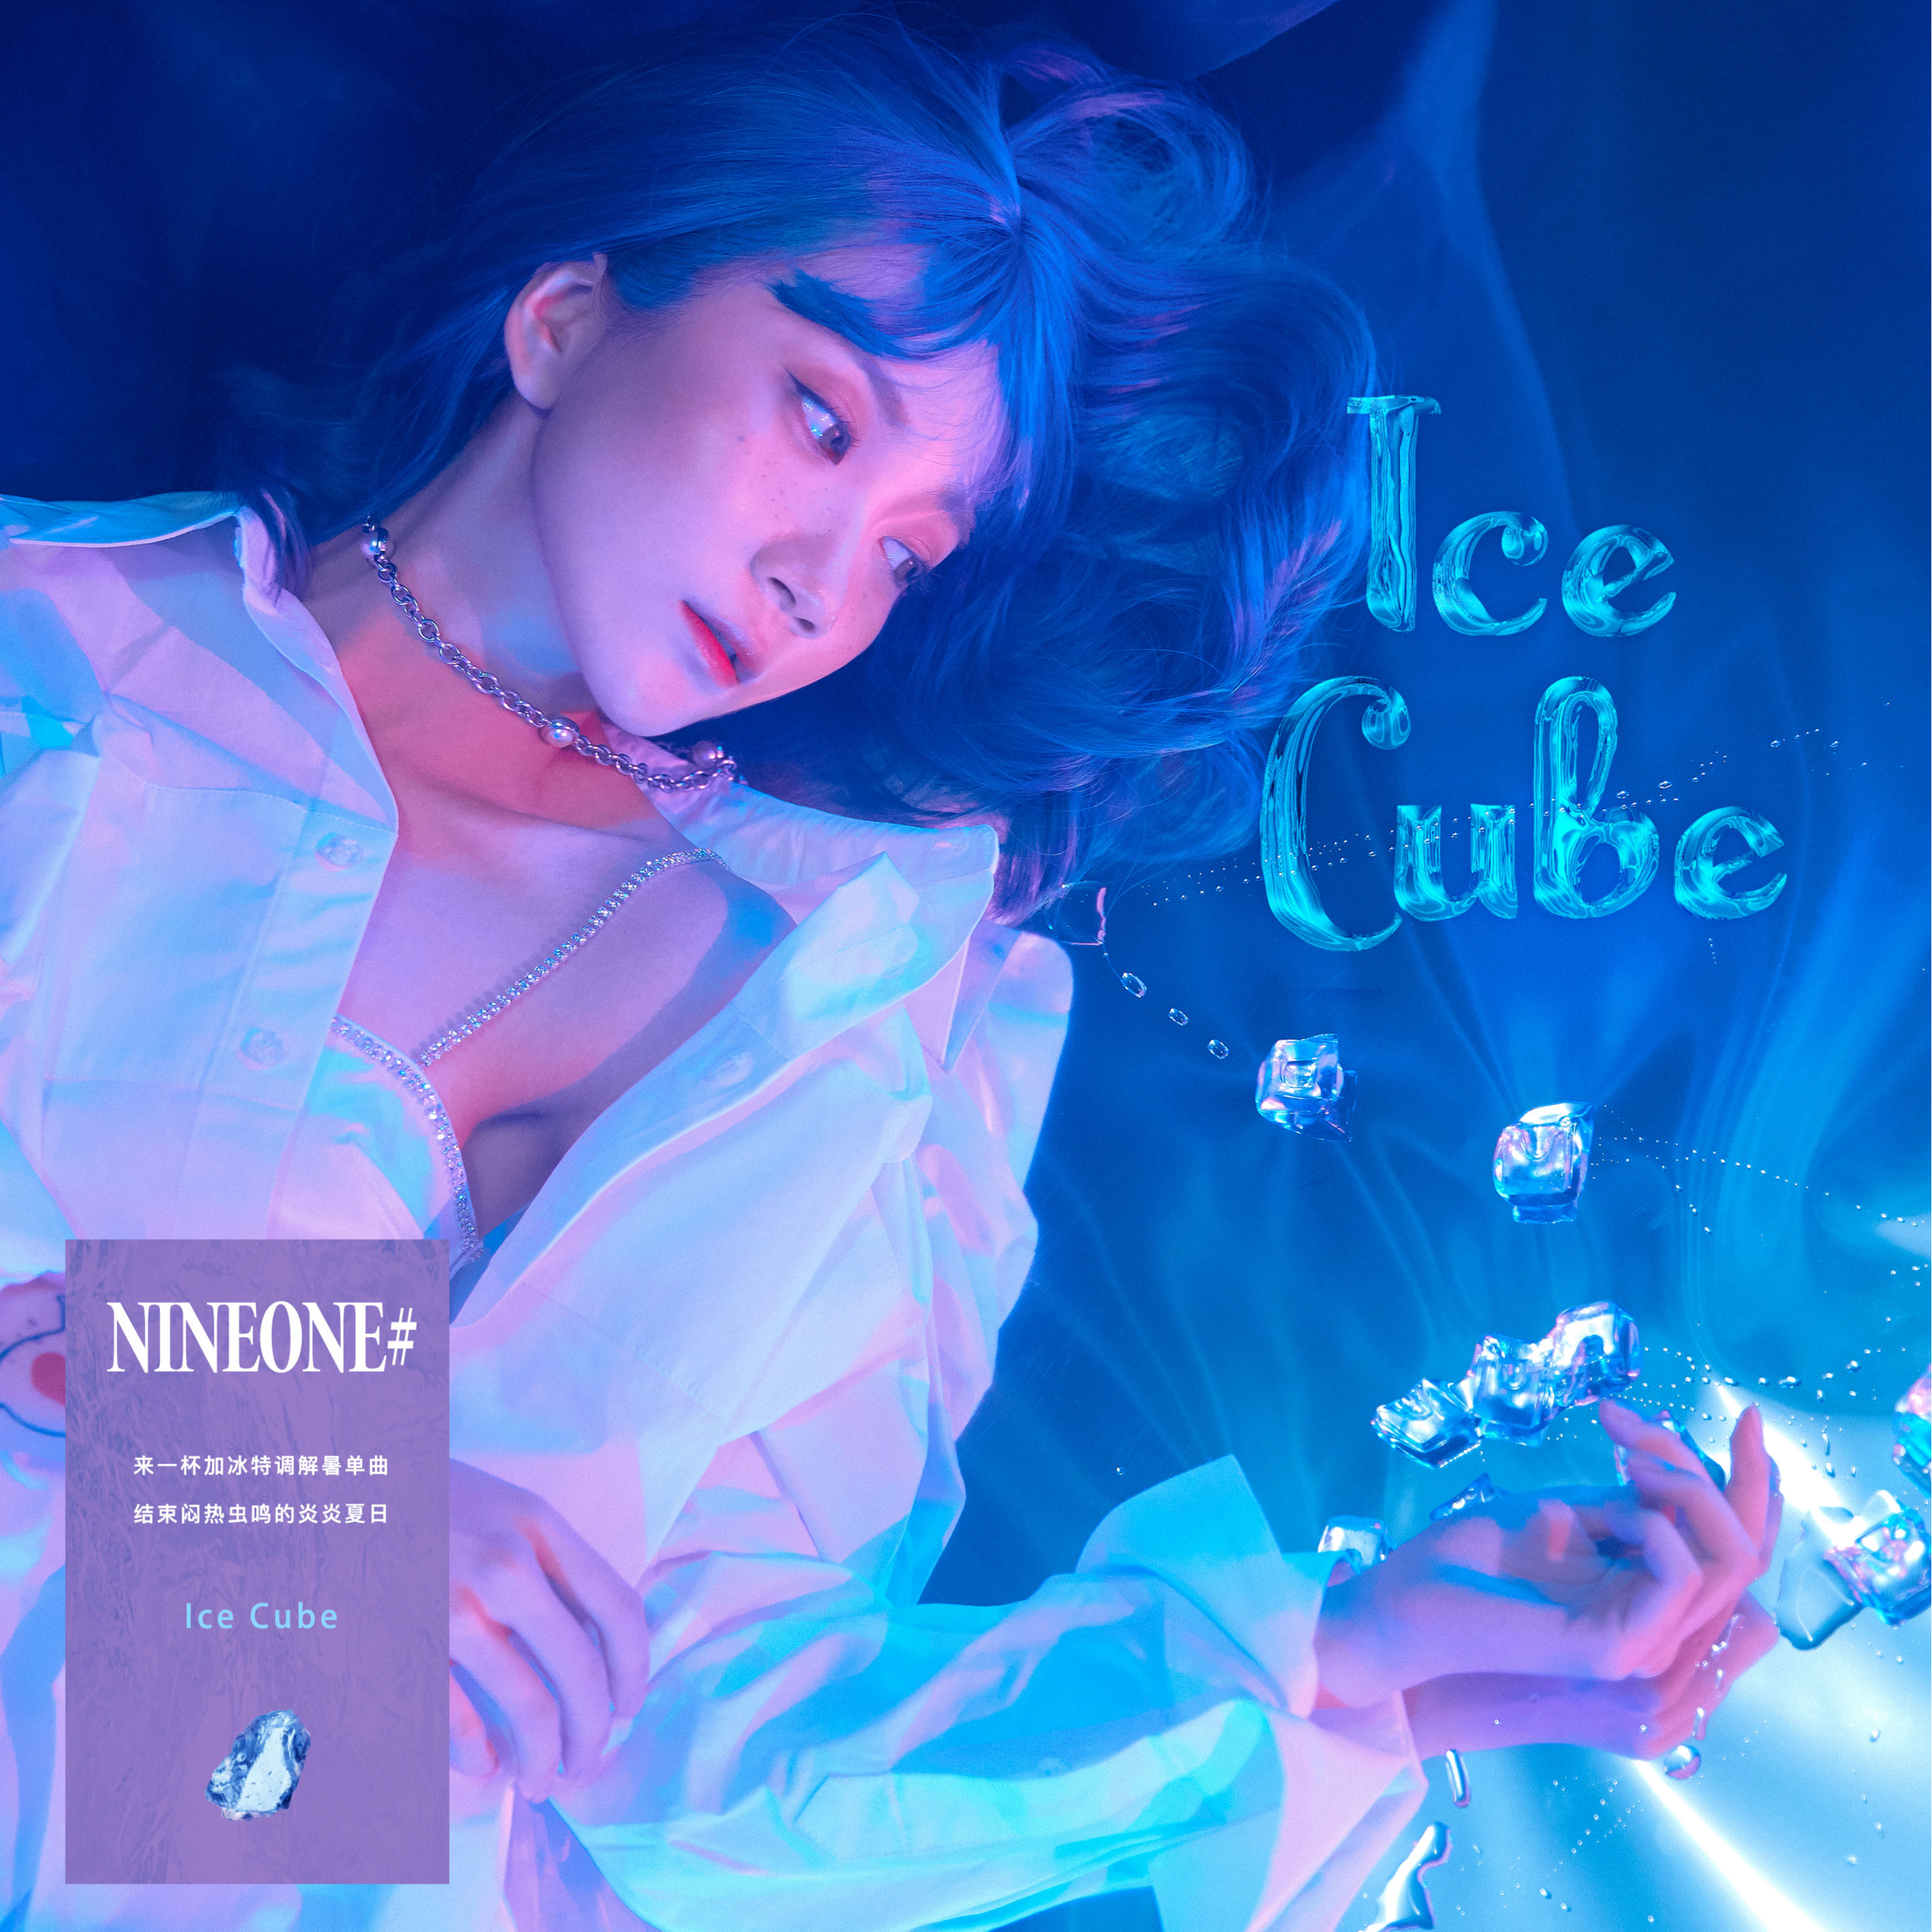 NINEONE#乃万 - Ice Cube